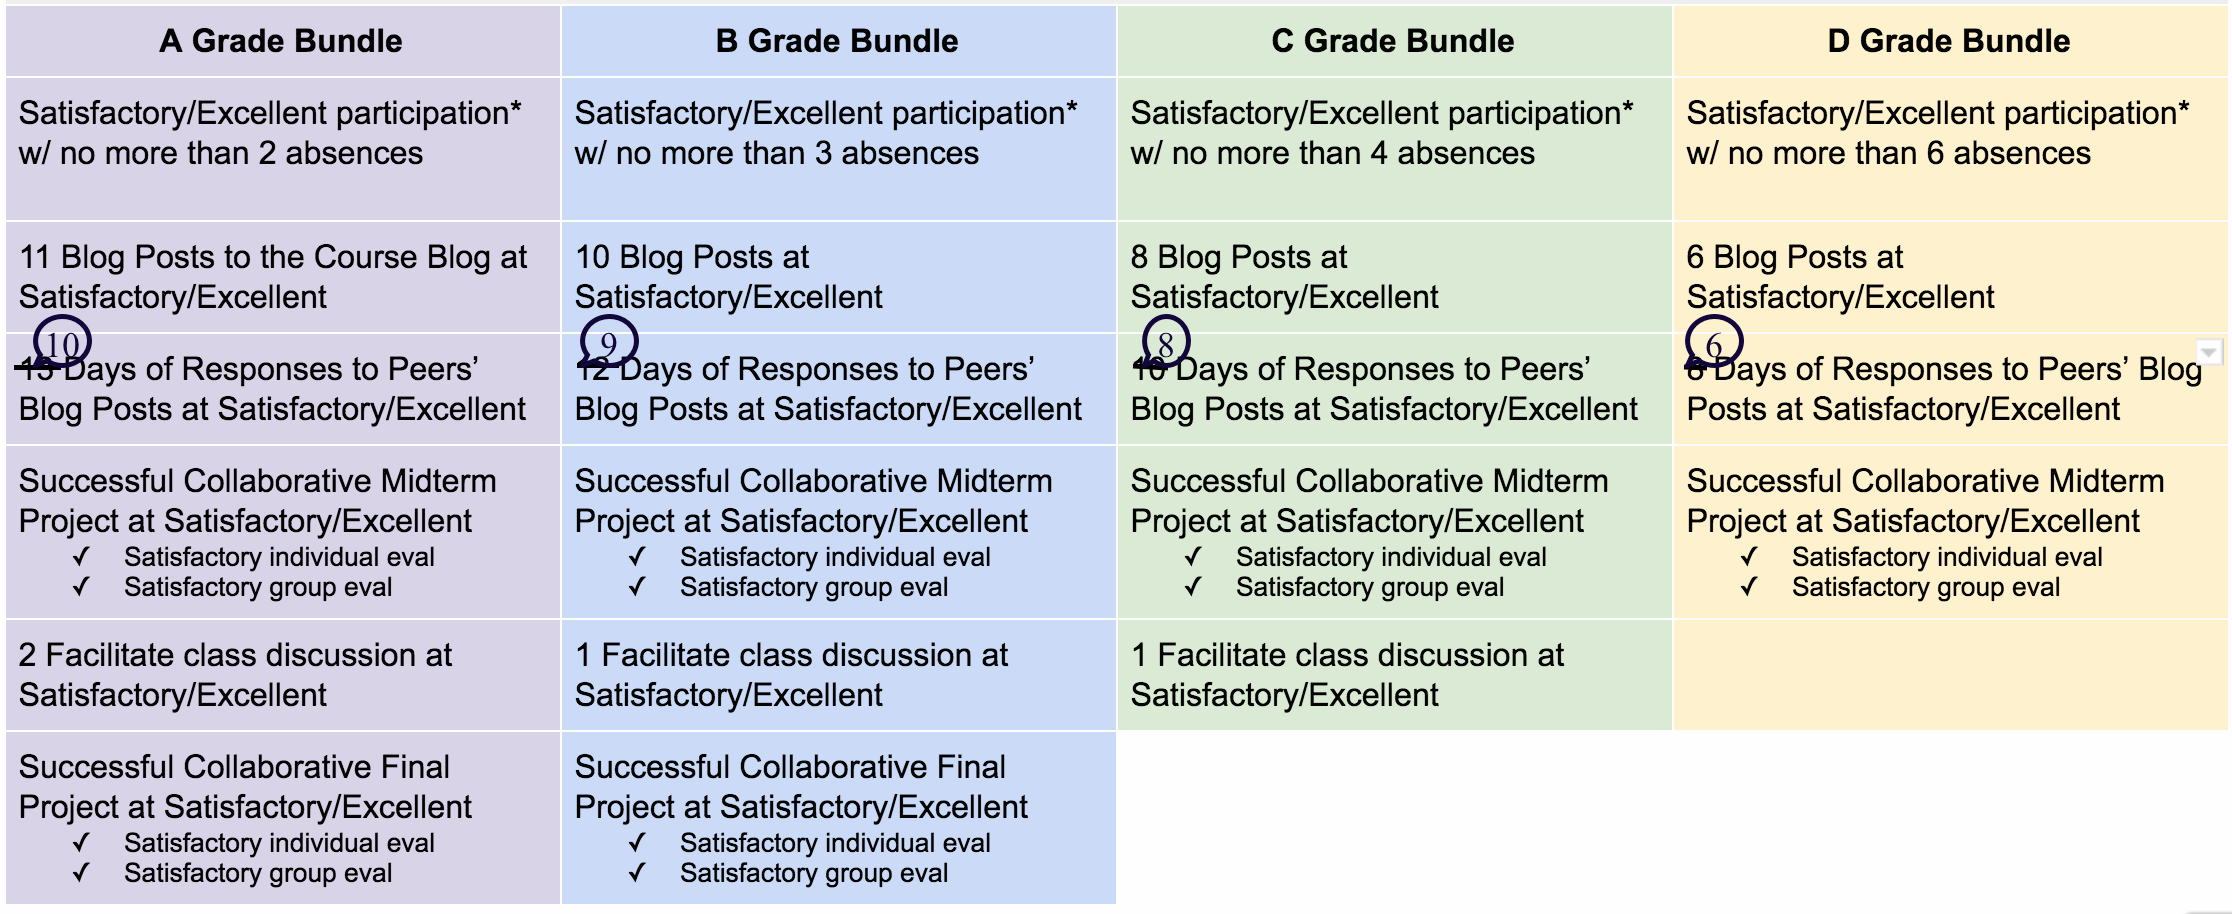 grading bundles